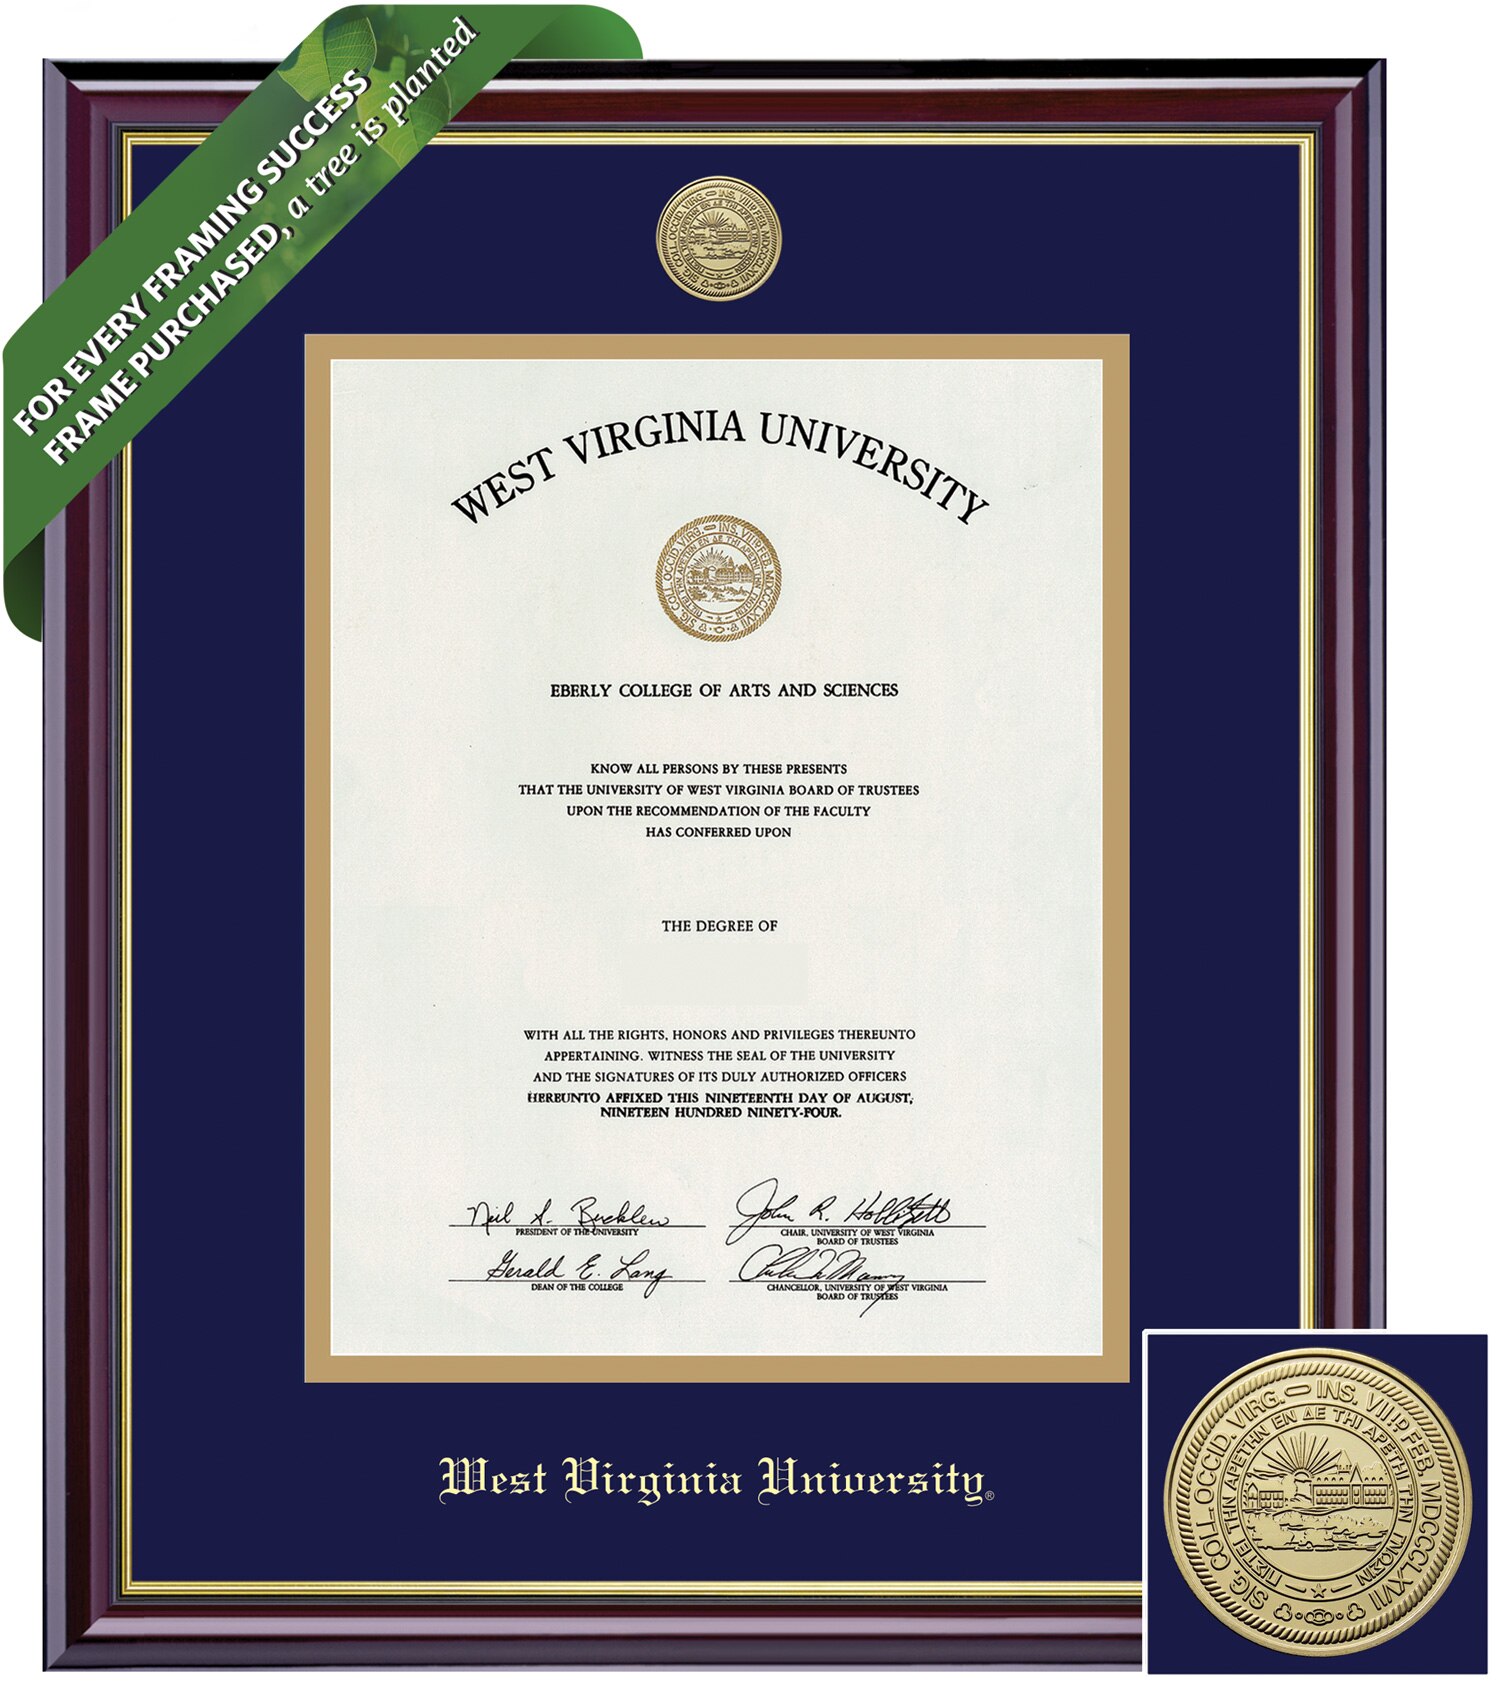 Framing Success 14 x 11 Windsor Gold Medallion Bachelors, Masters Diploma Frame